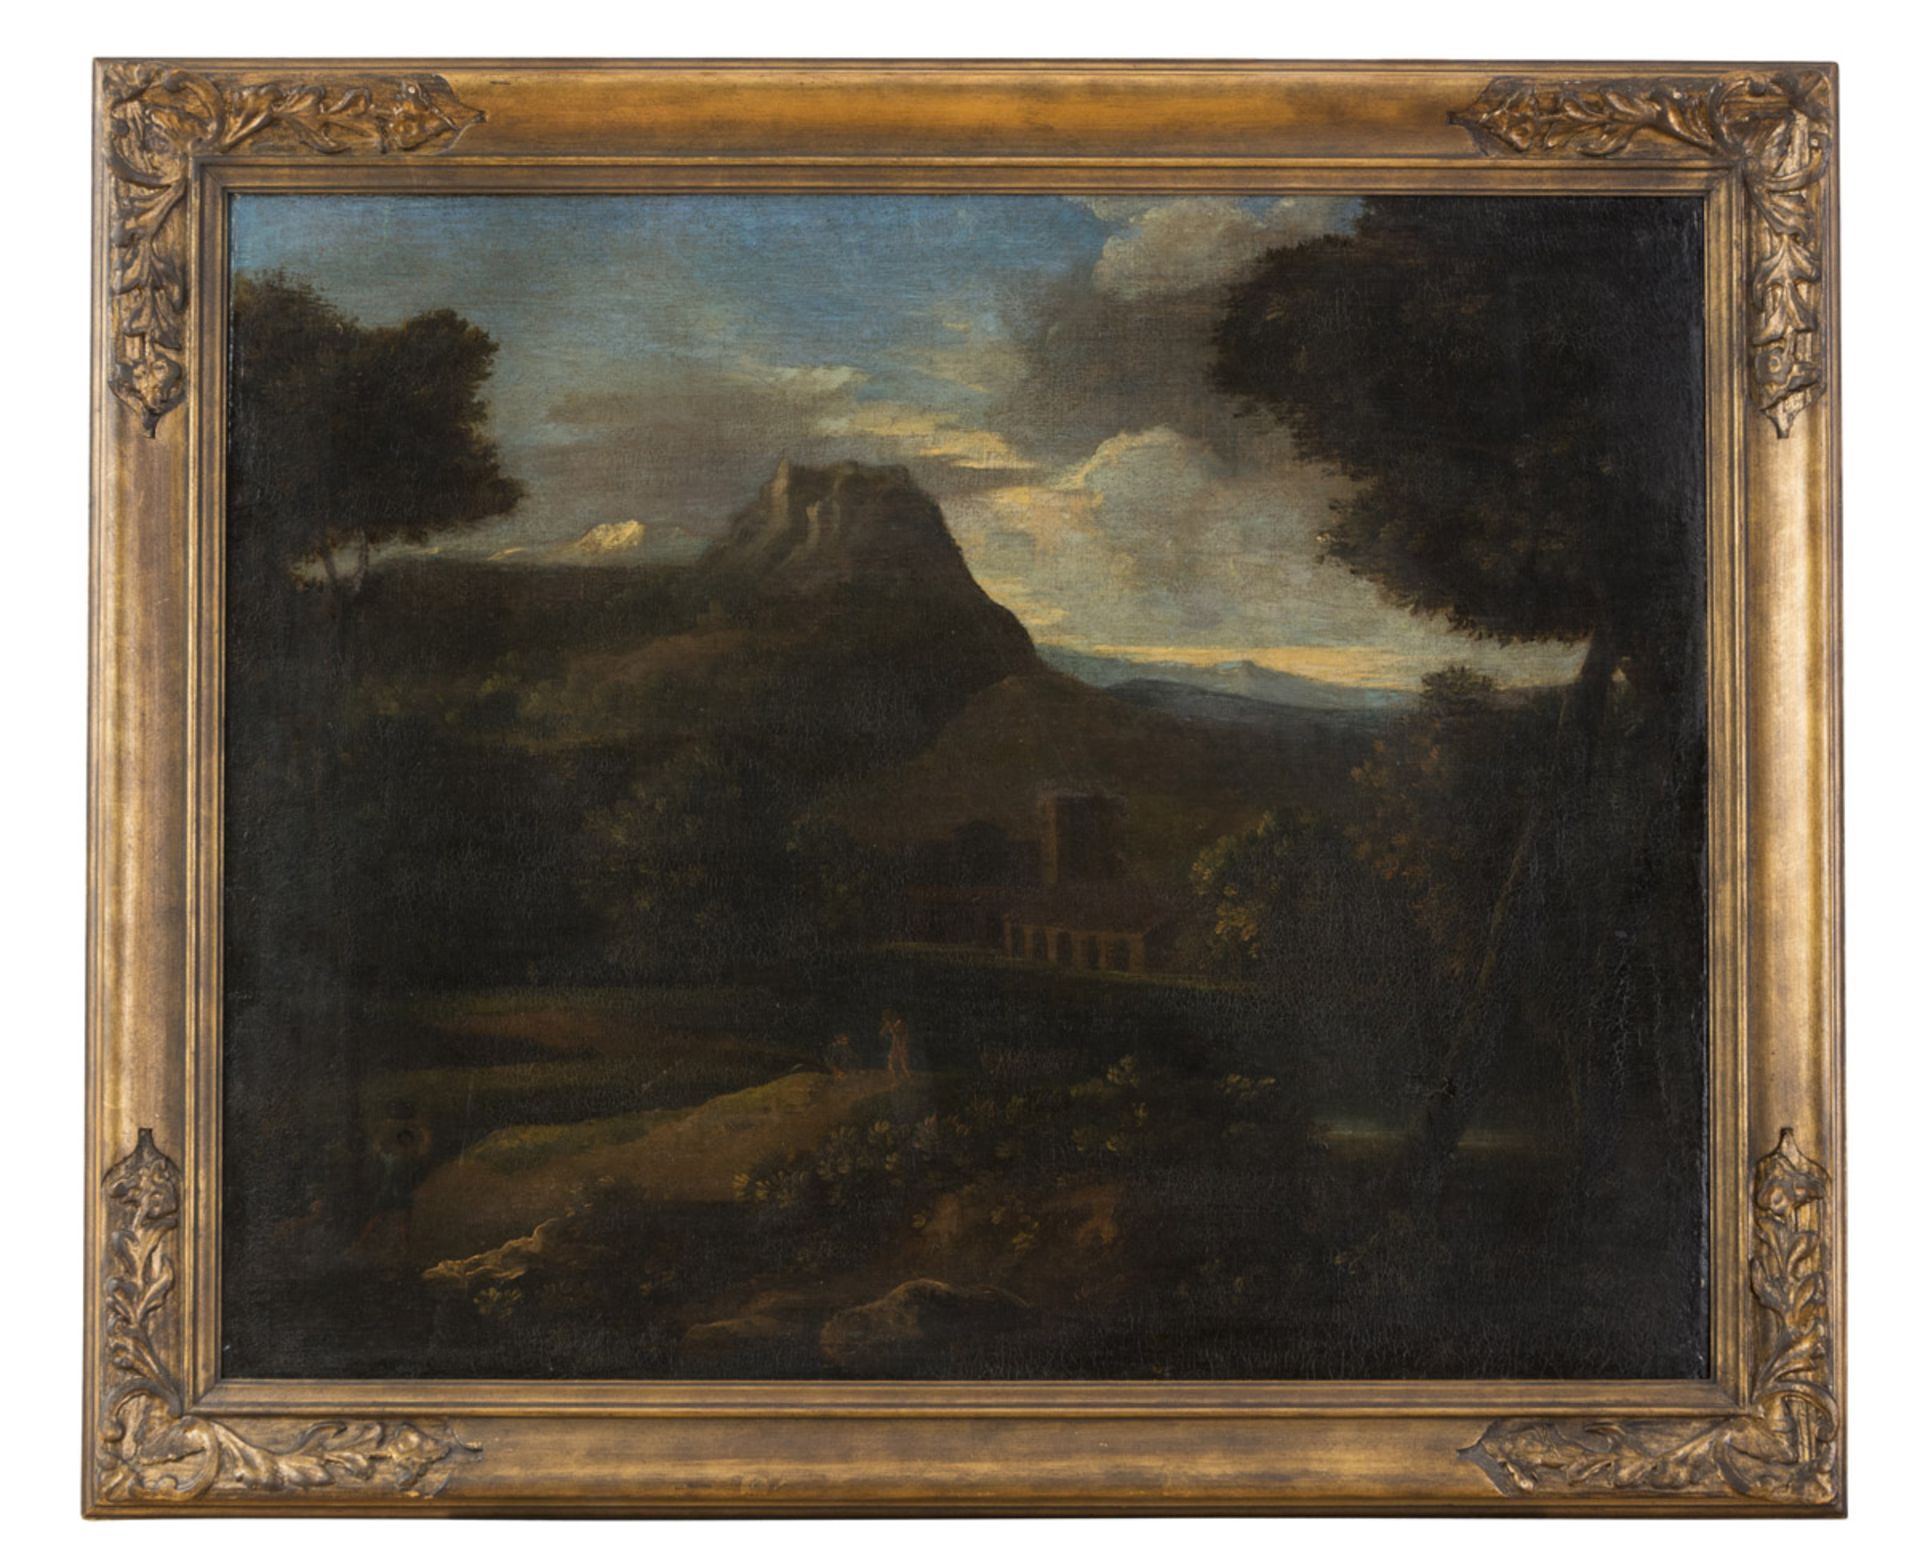 FOLLOWER OF JAN FRANS VAN BLOEMEN, 18TH CENTURY LANDSCAPE IN LAZIO WITH FIGURES Oil on canvas, cm.